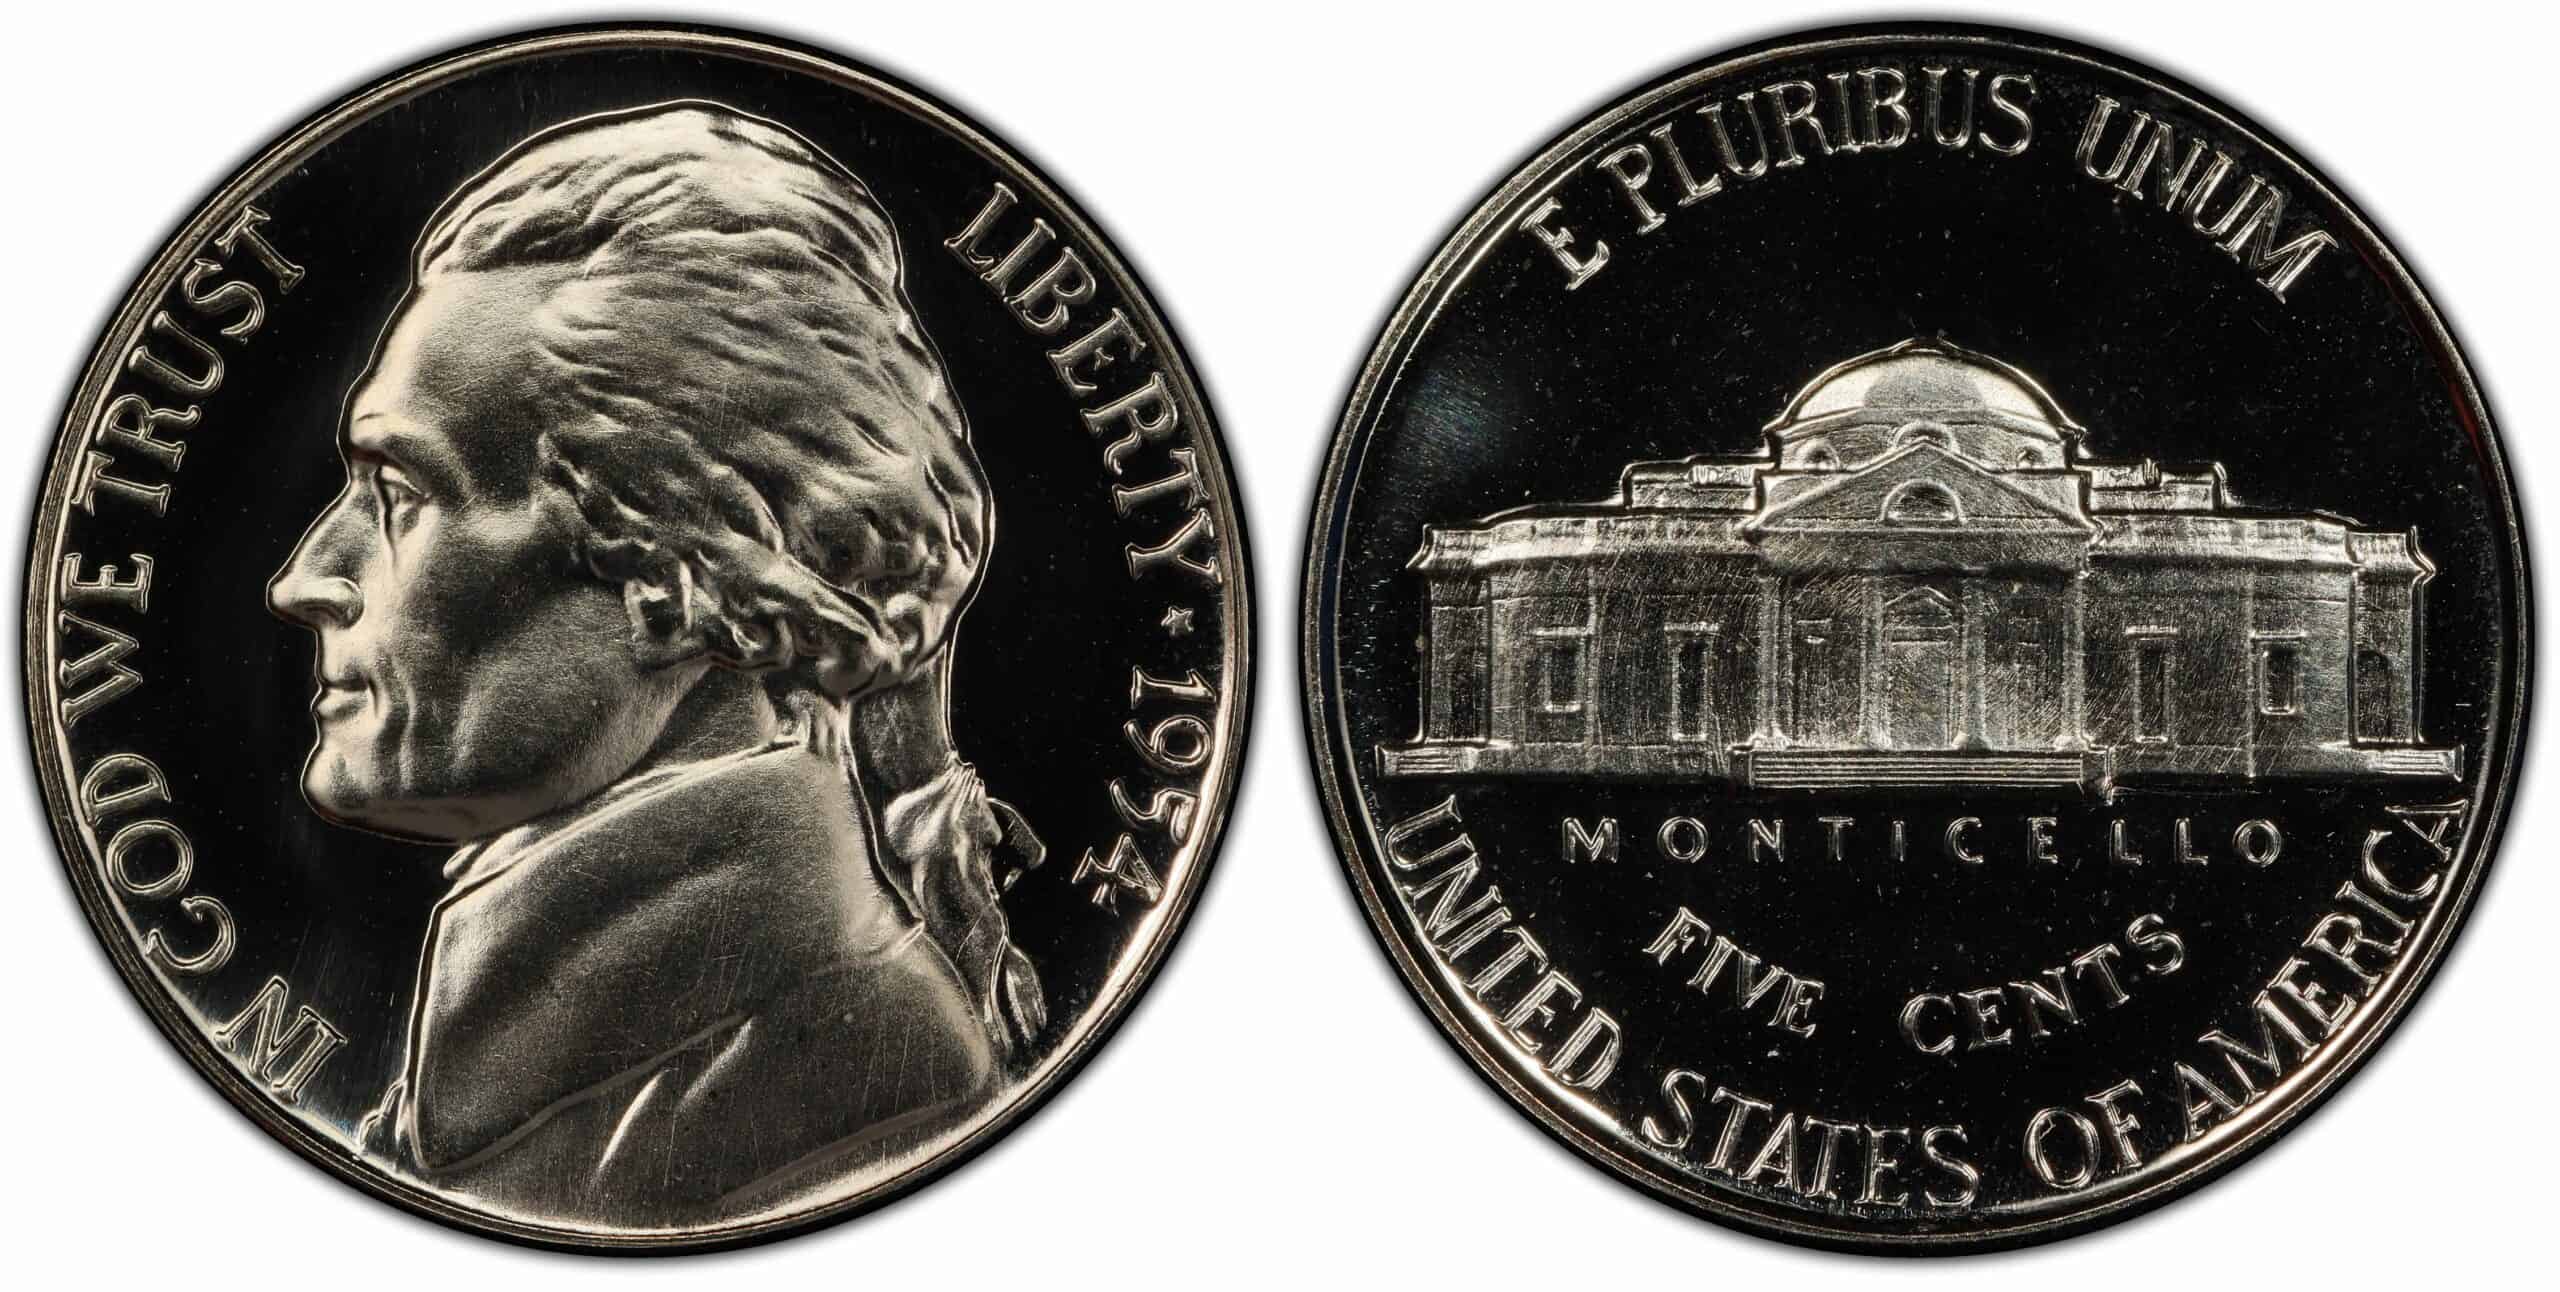 1954 proof Jefferson nickel